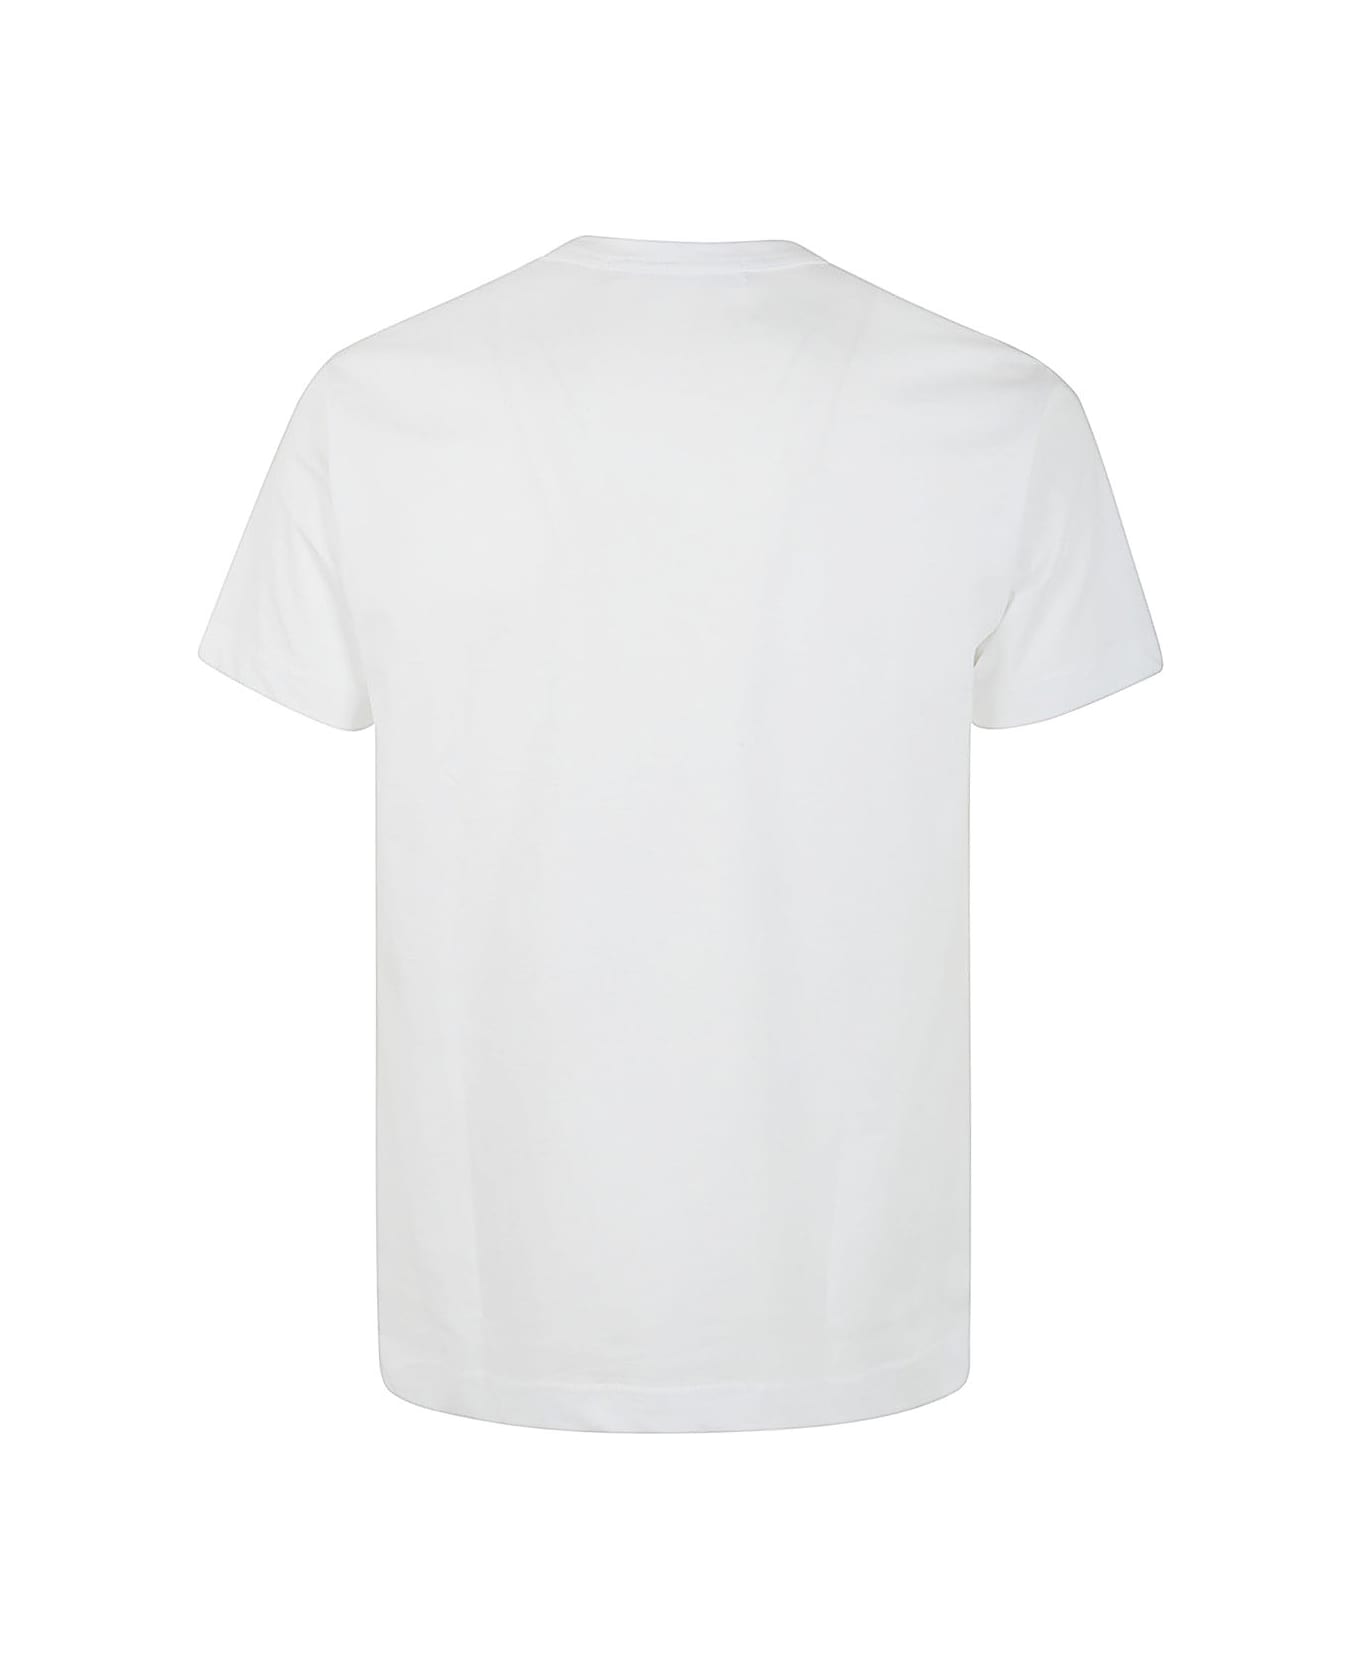 Comme des Garçons Shirt Mens T-shirt Knit - White